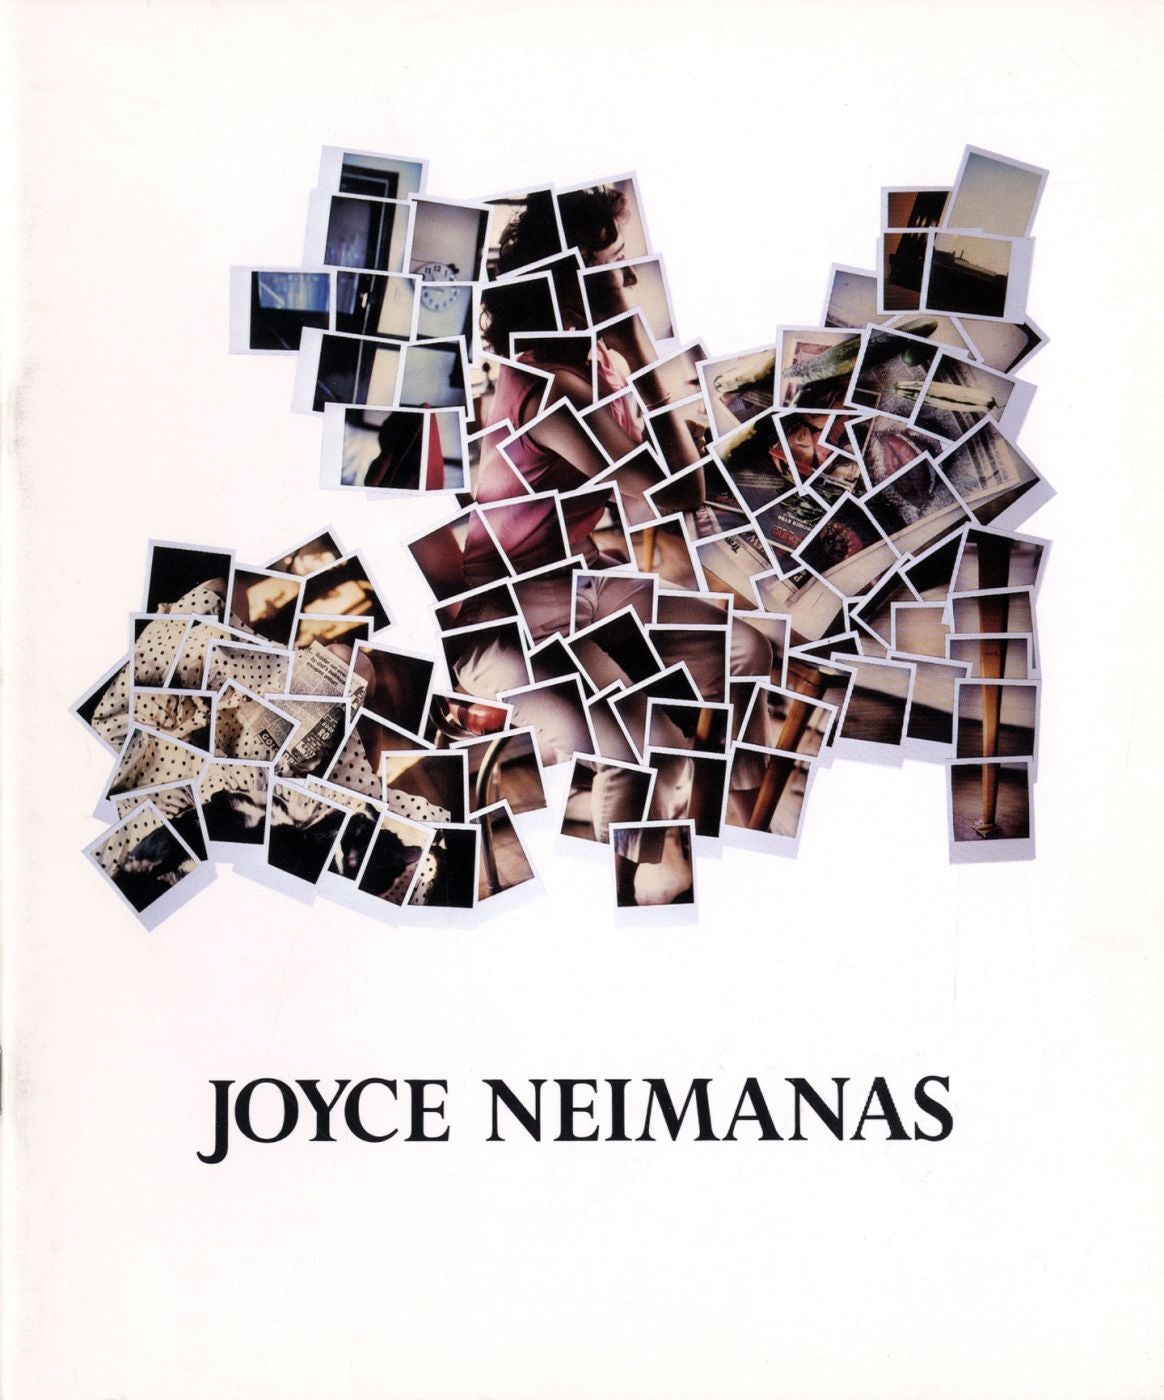 Joyce Neimanas (Center for Creative Photography)